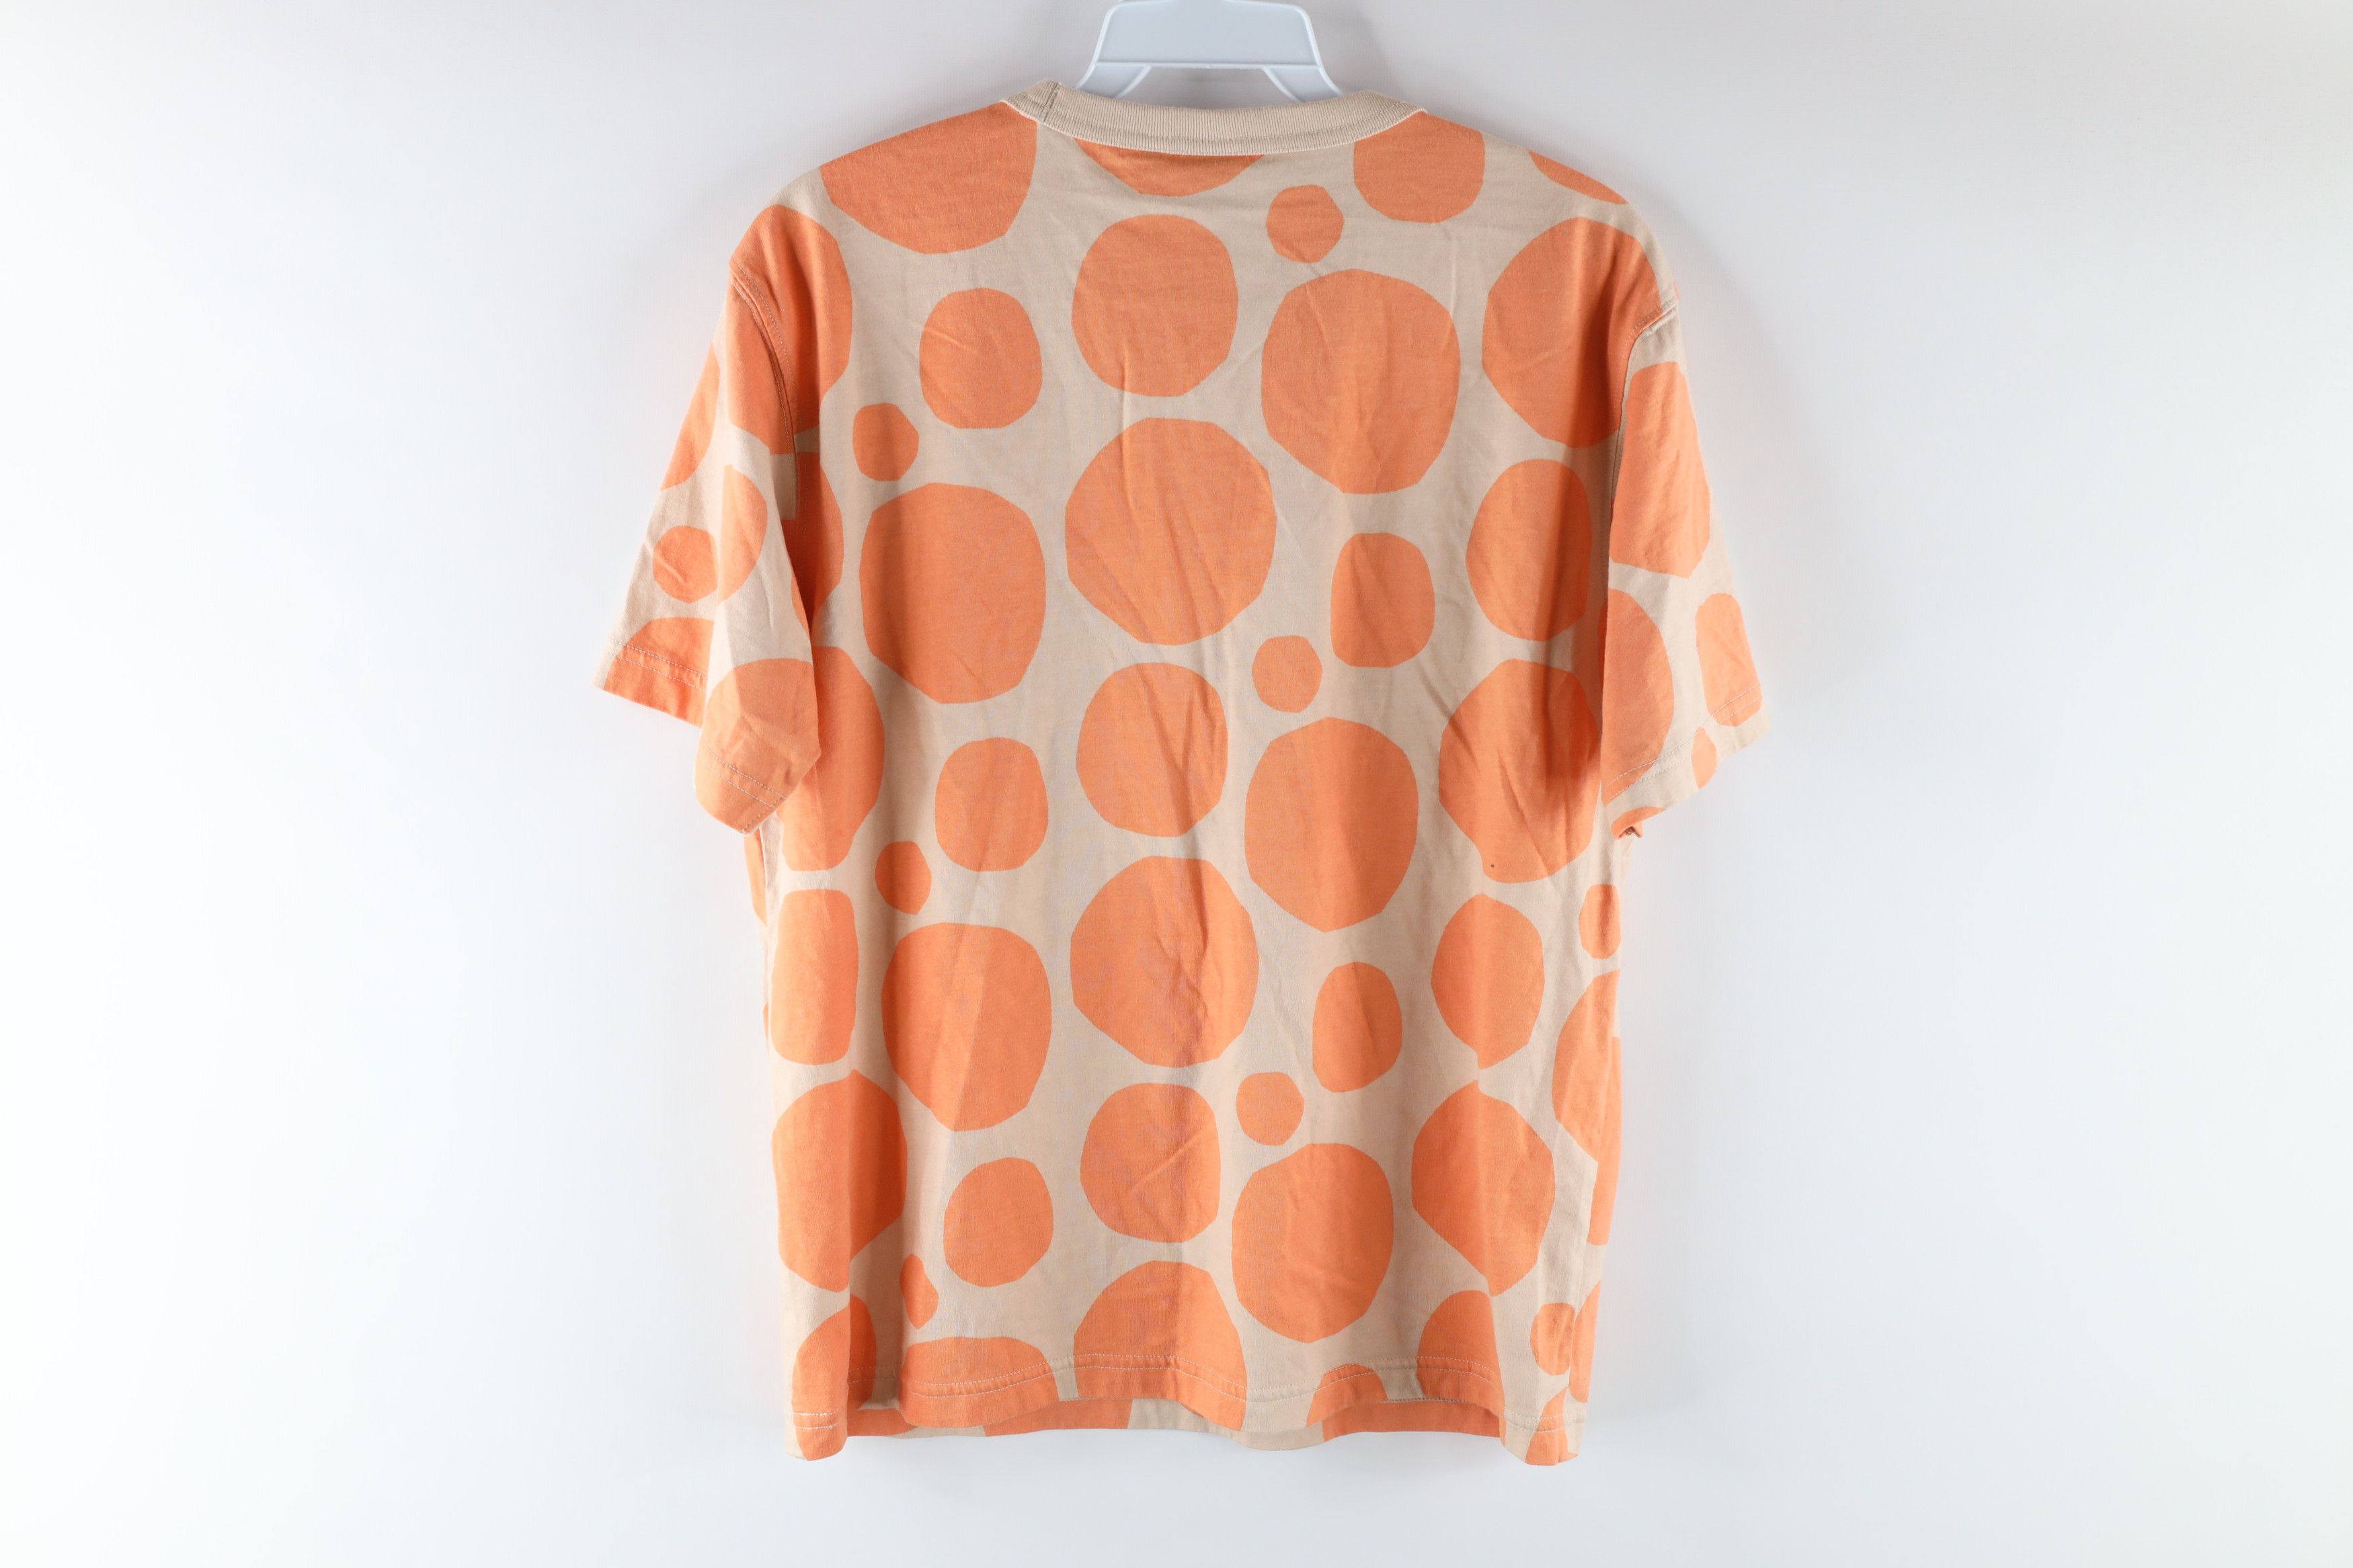 Uniqlo Uniqlo x Marimekko Polka Circle Print Short Sleeve T-Shirt Size S / US 4 / IT 40 - 5 Thumbnail